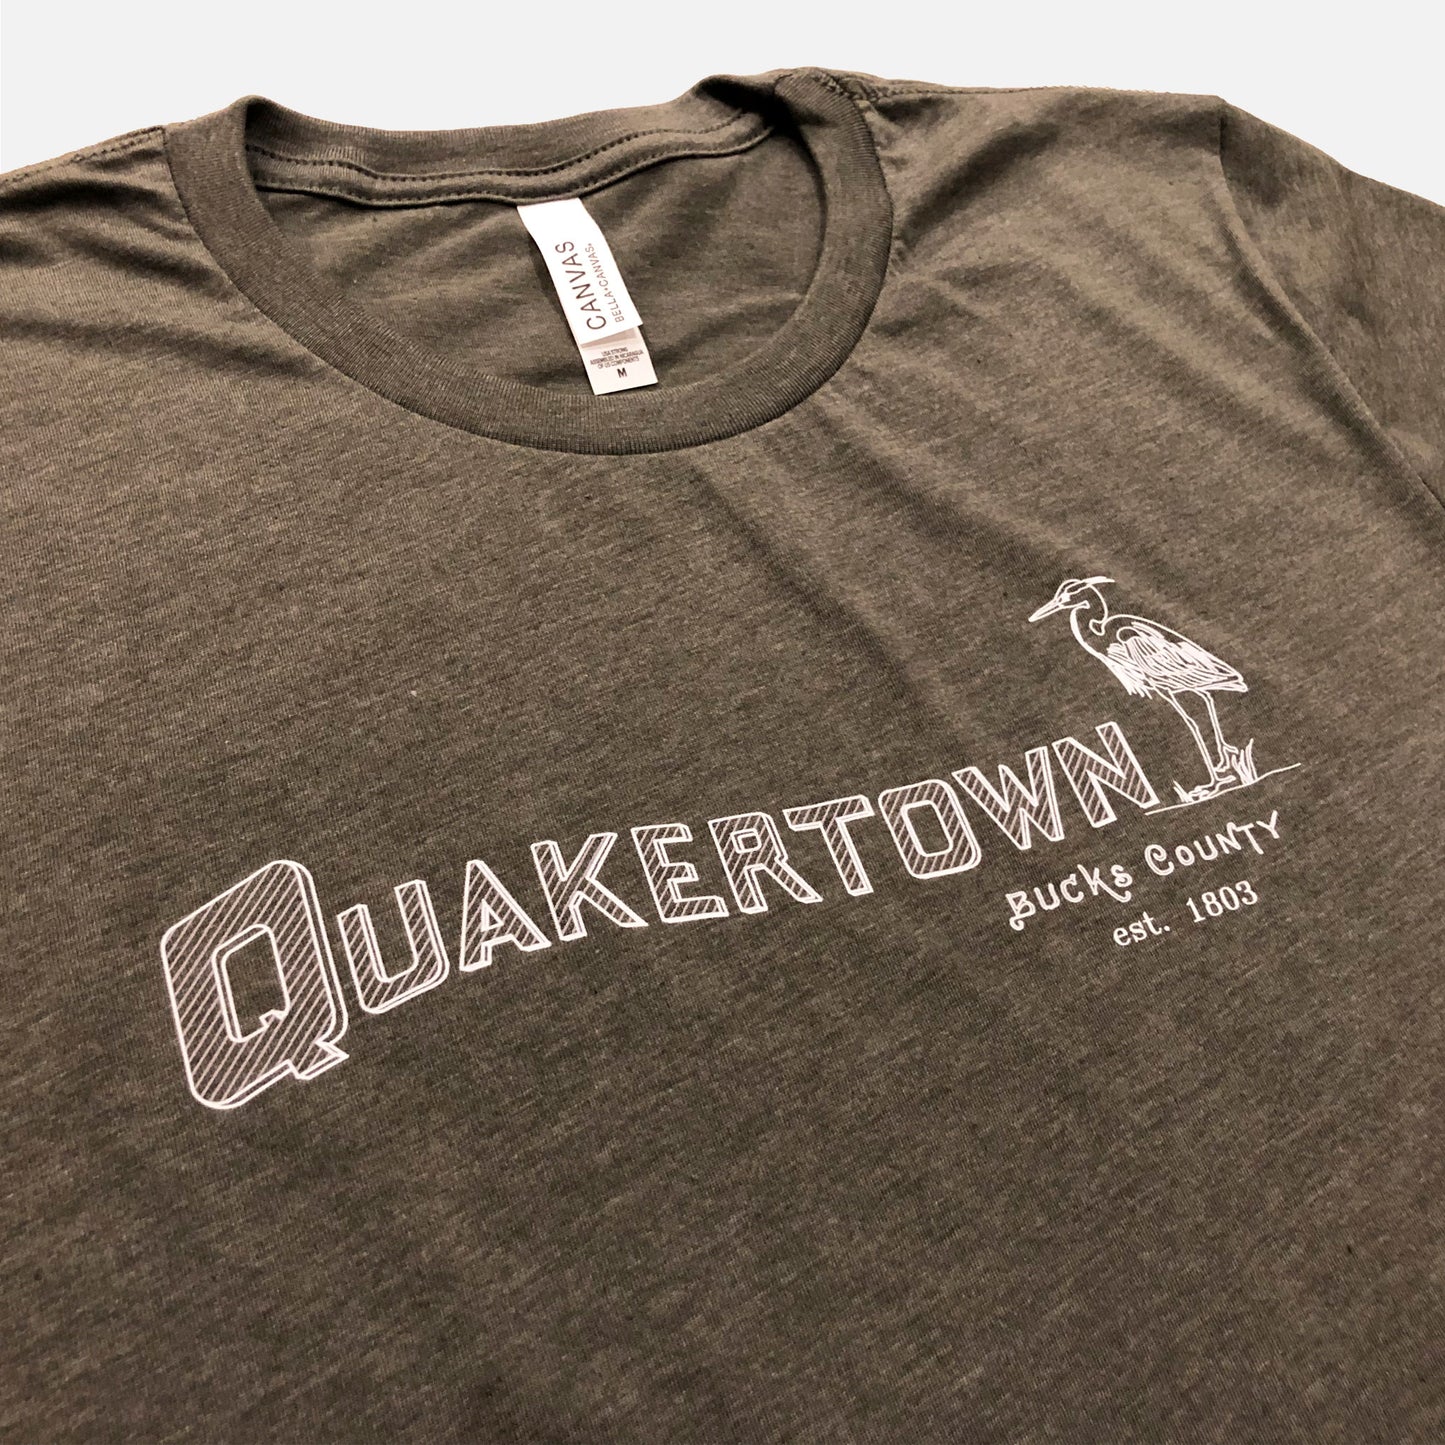 Quakertown graphic T-shirt - heather military green